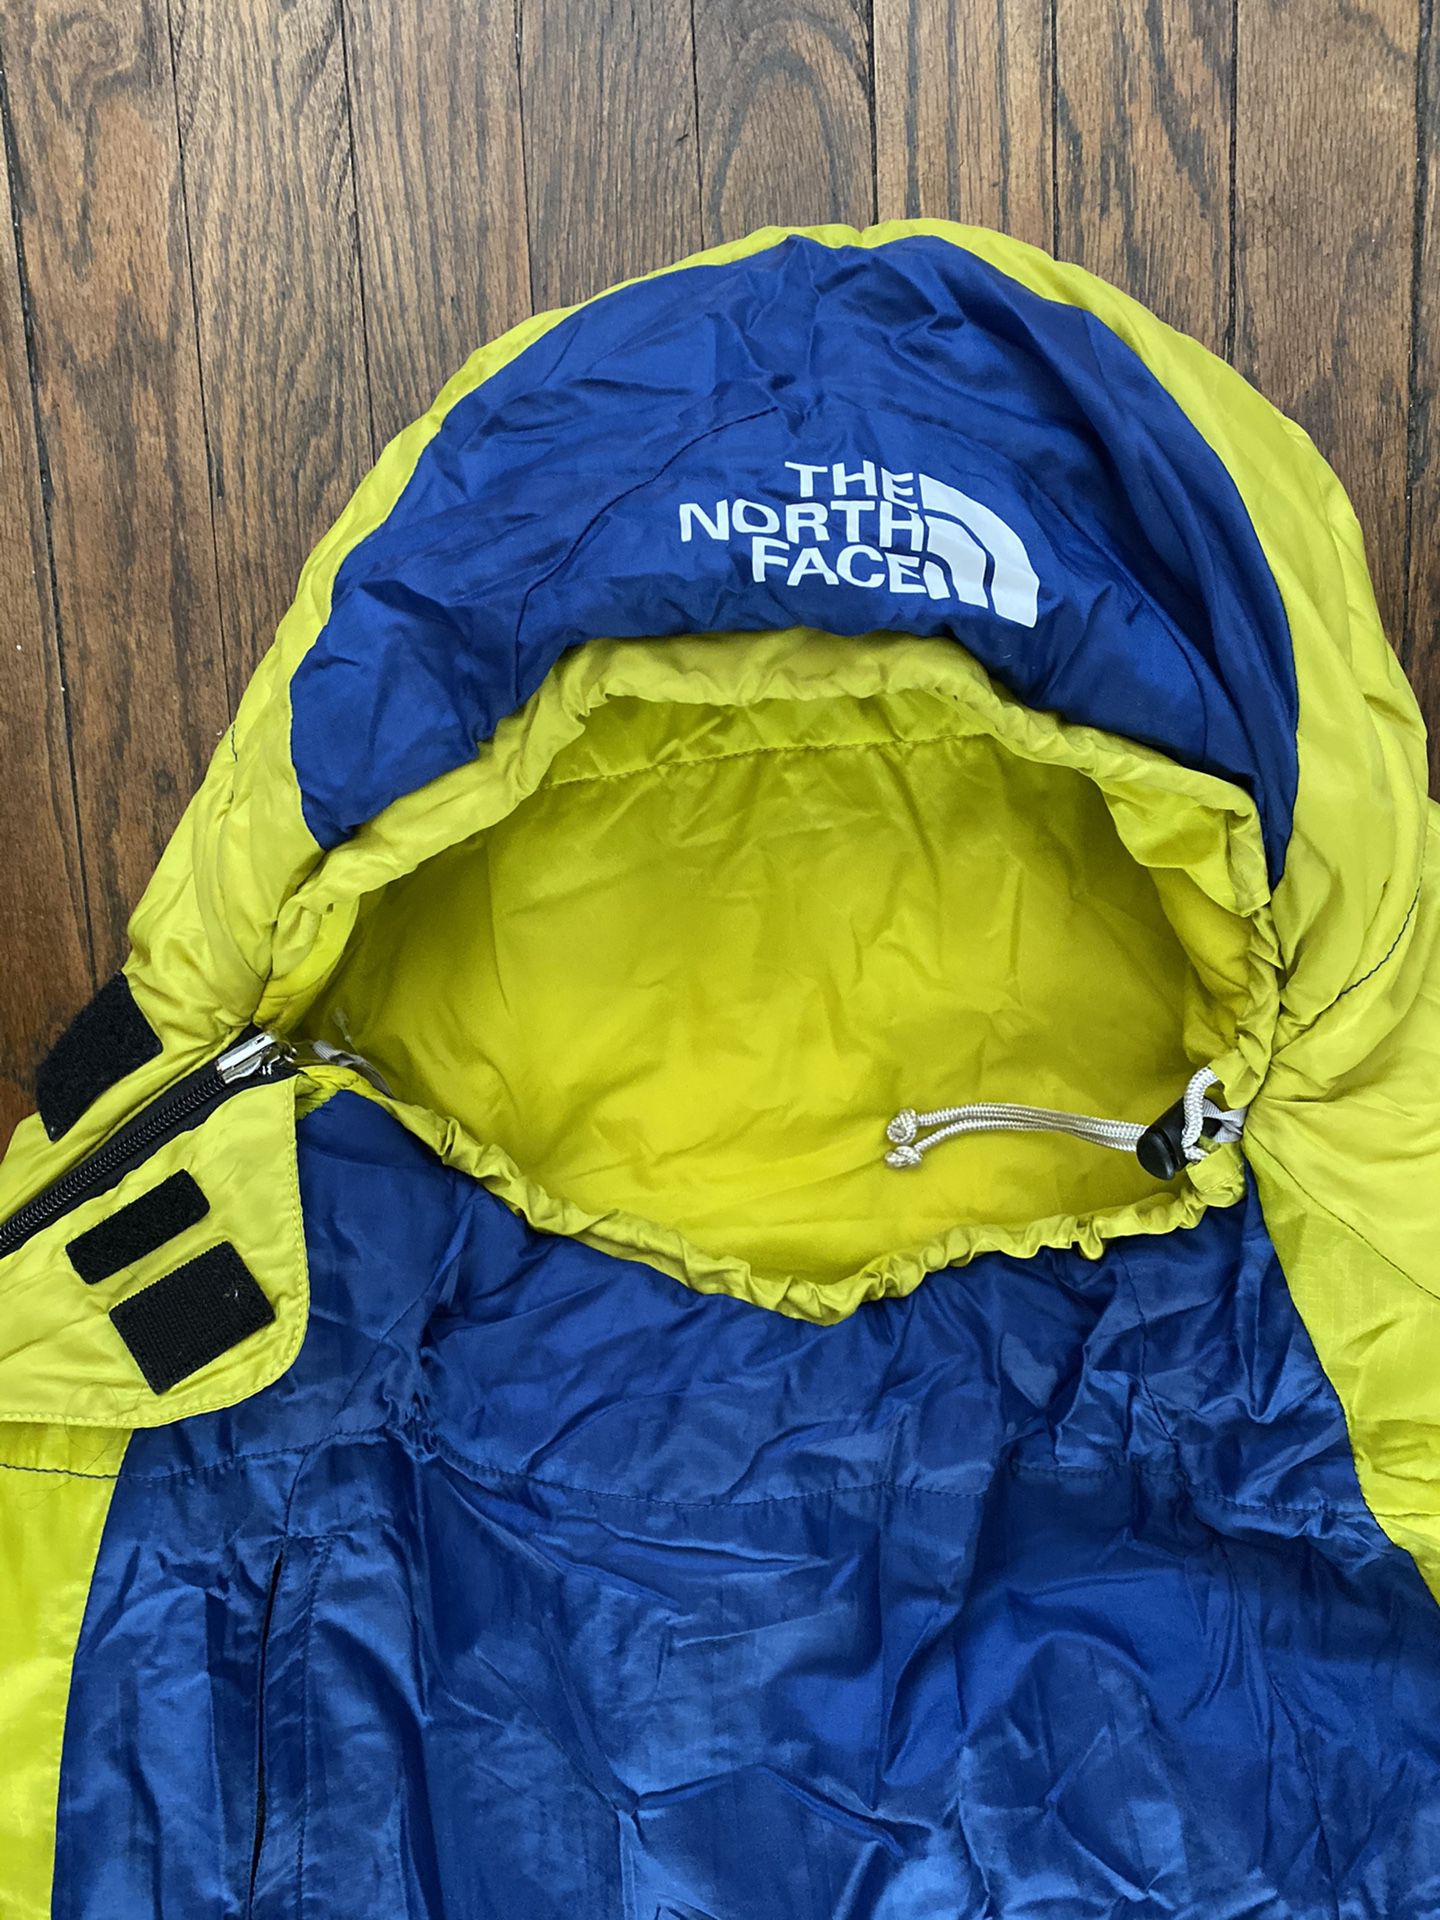 The North Face Blue Ridge +20 (Kids sleeping bag)